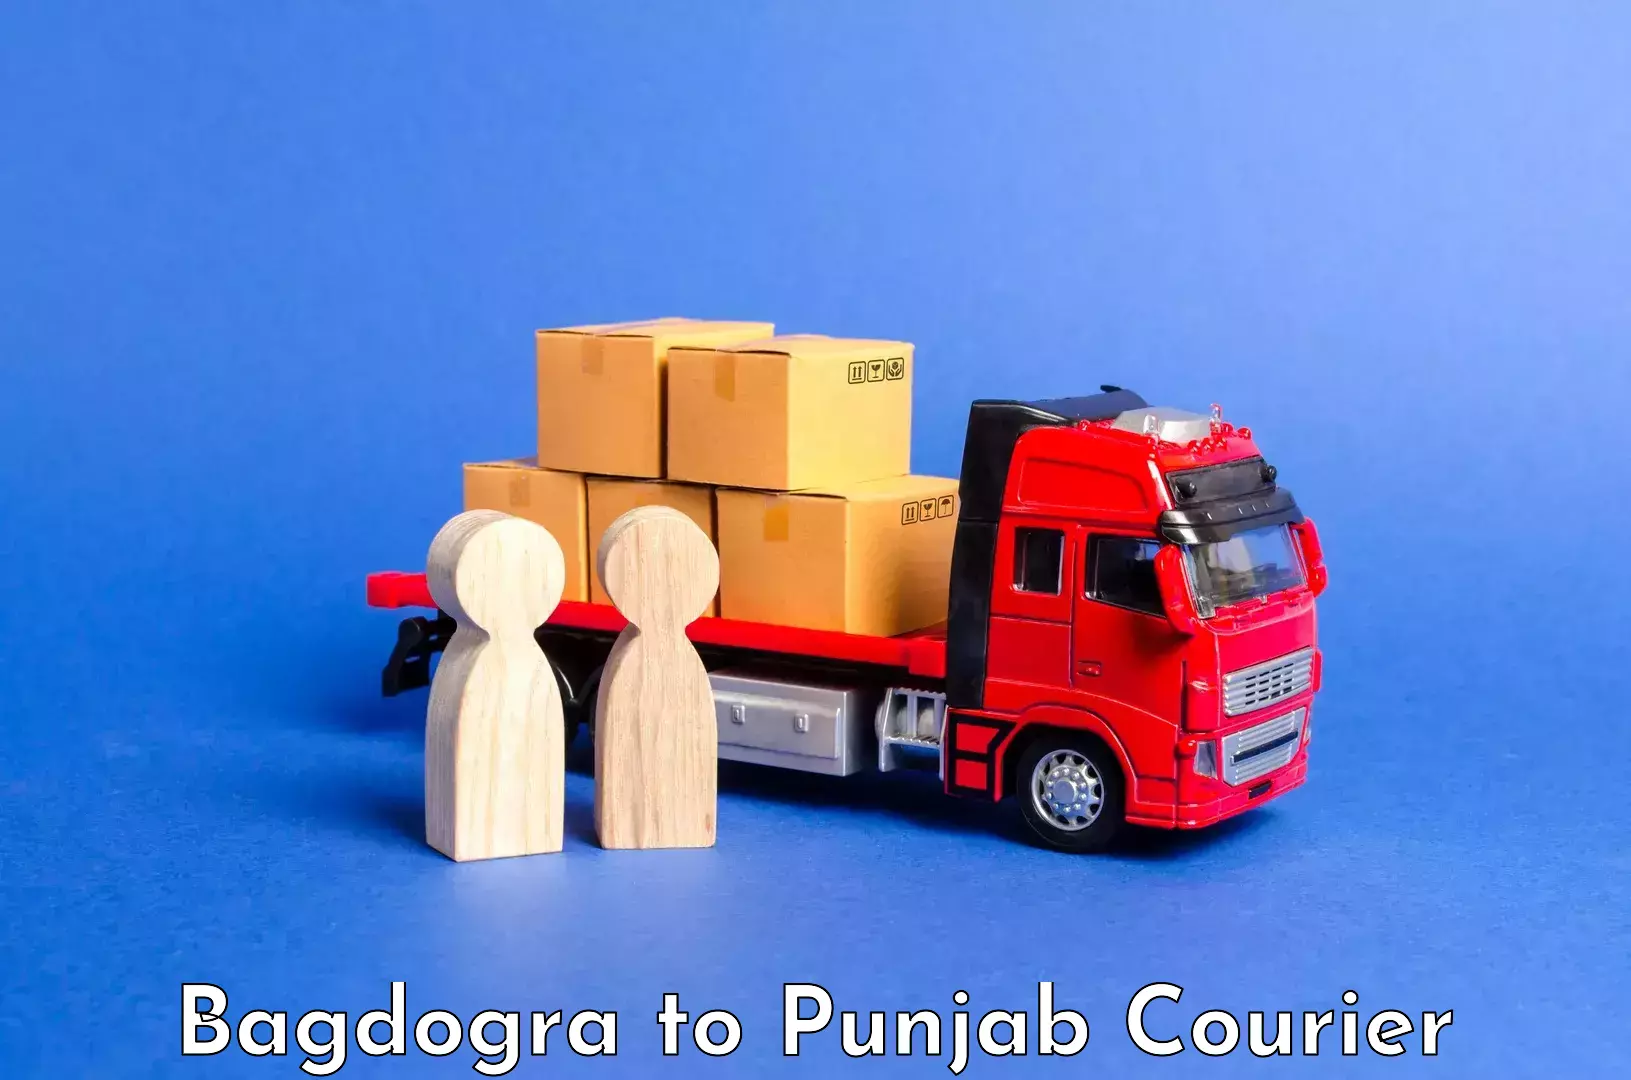 Luggage delivery network Bagdogra to Dinanagar